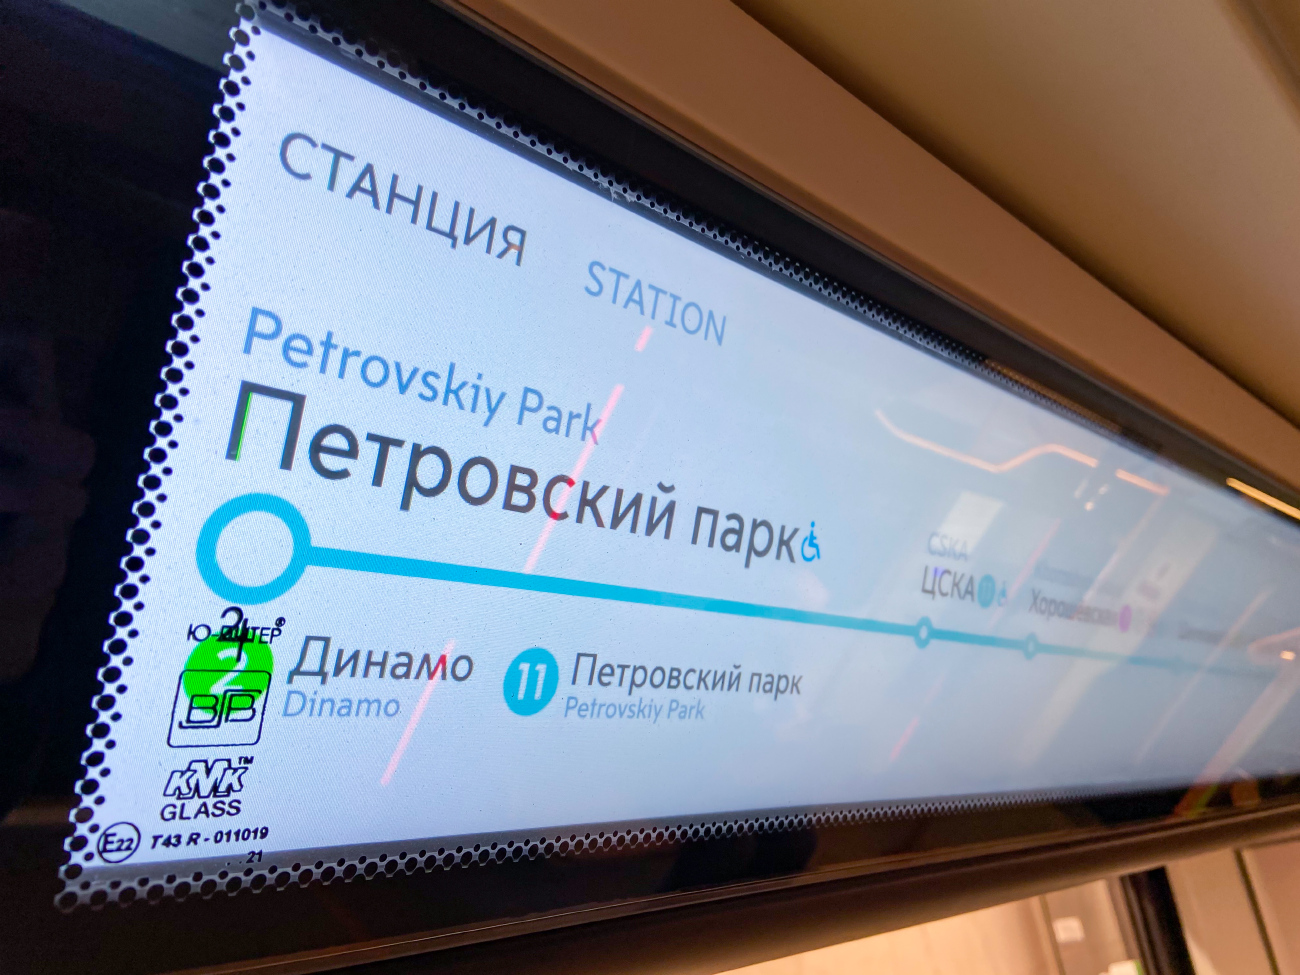 Moskva — Metro — Maps of Individual Lines; Moskva — Metropolitain — [11] Bol'shaya Koltsevaya Line